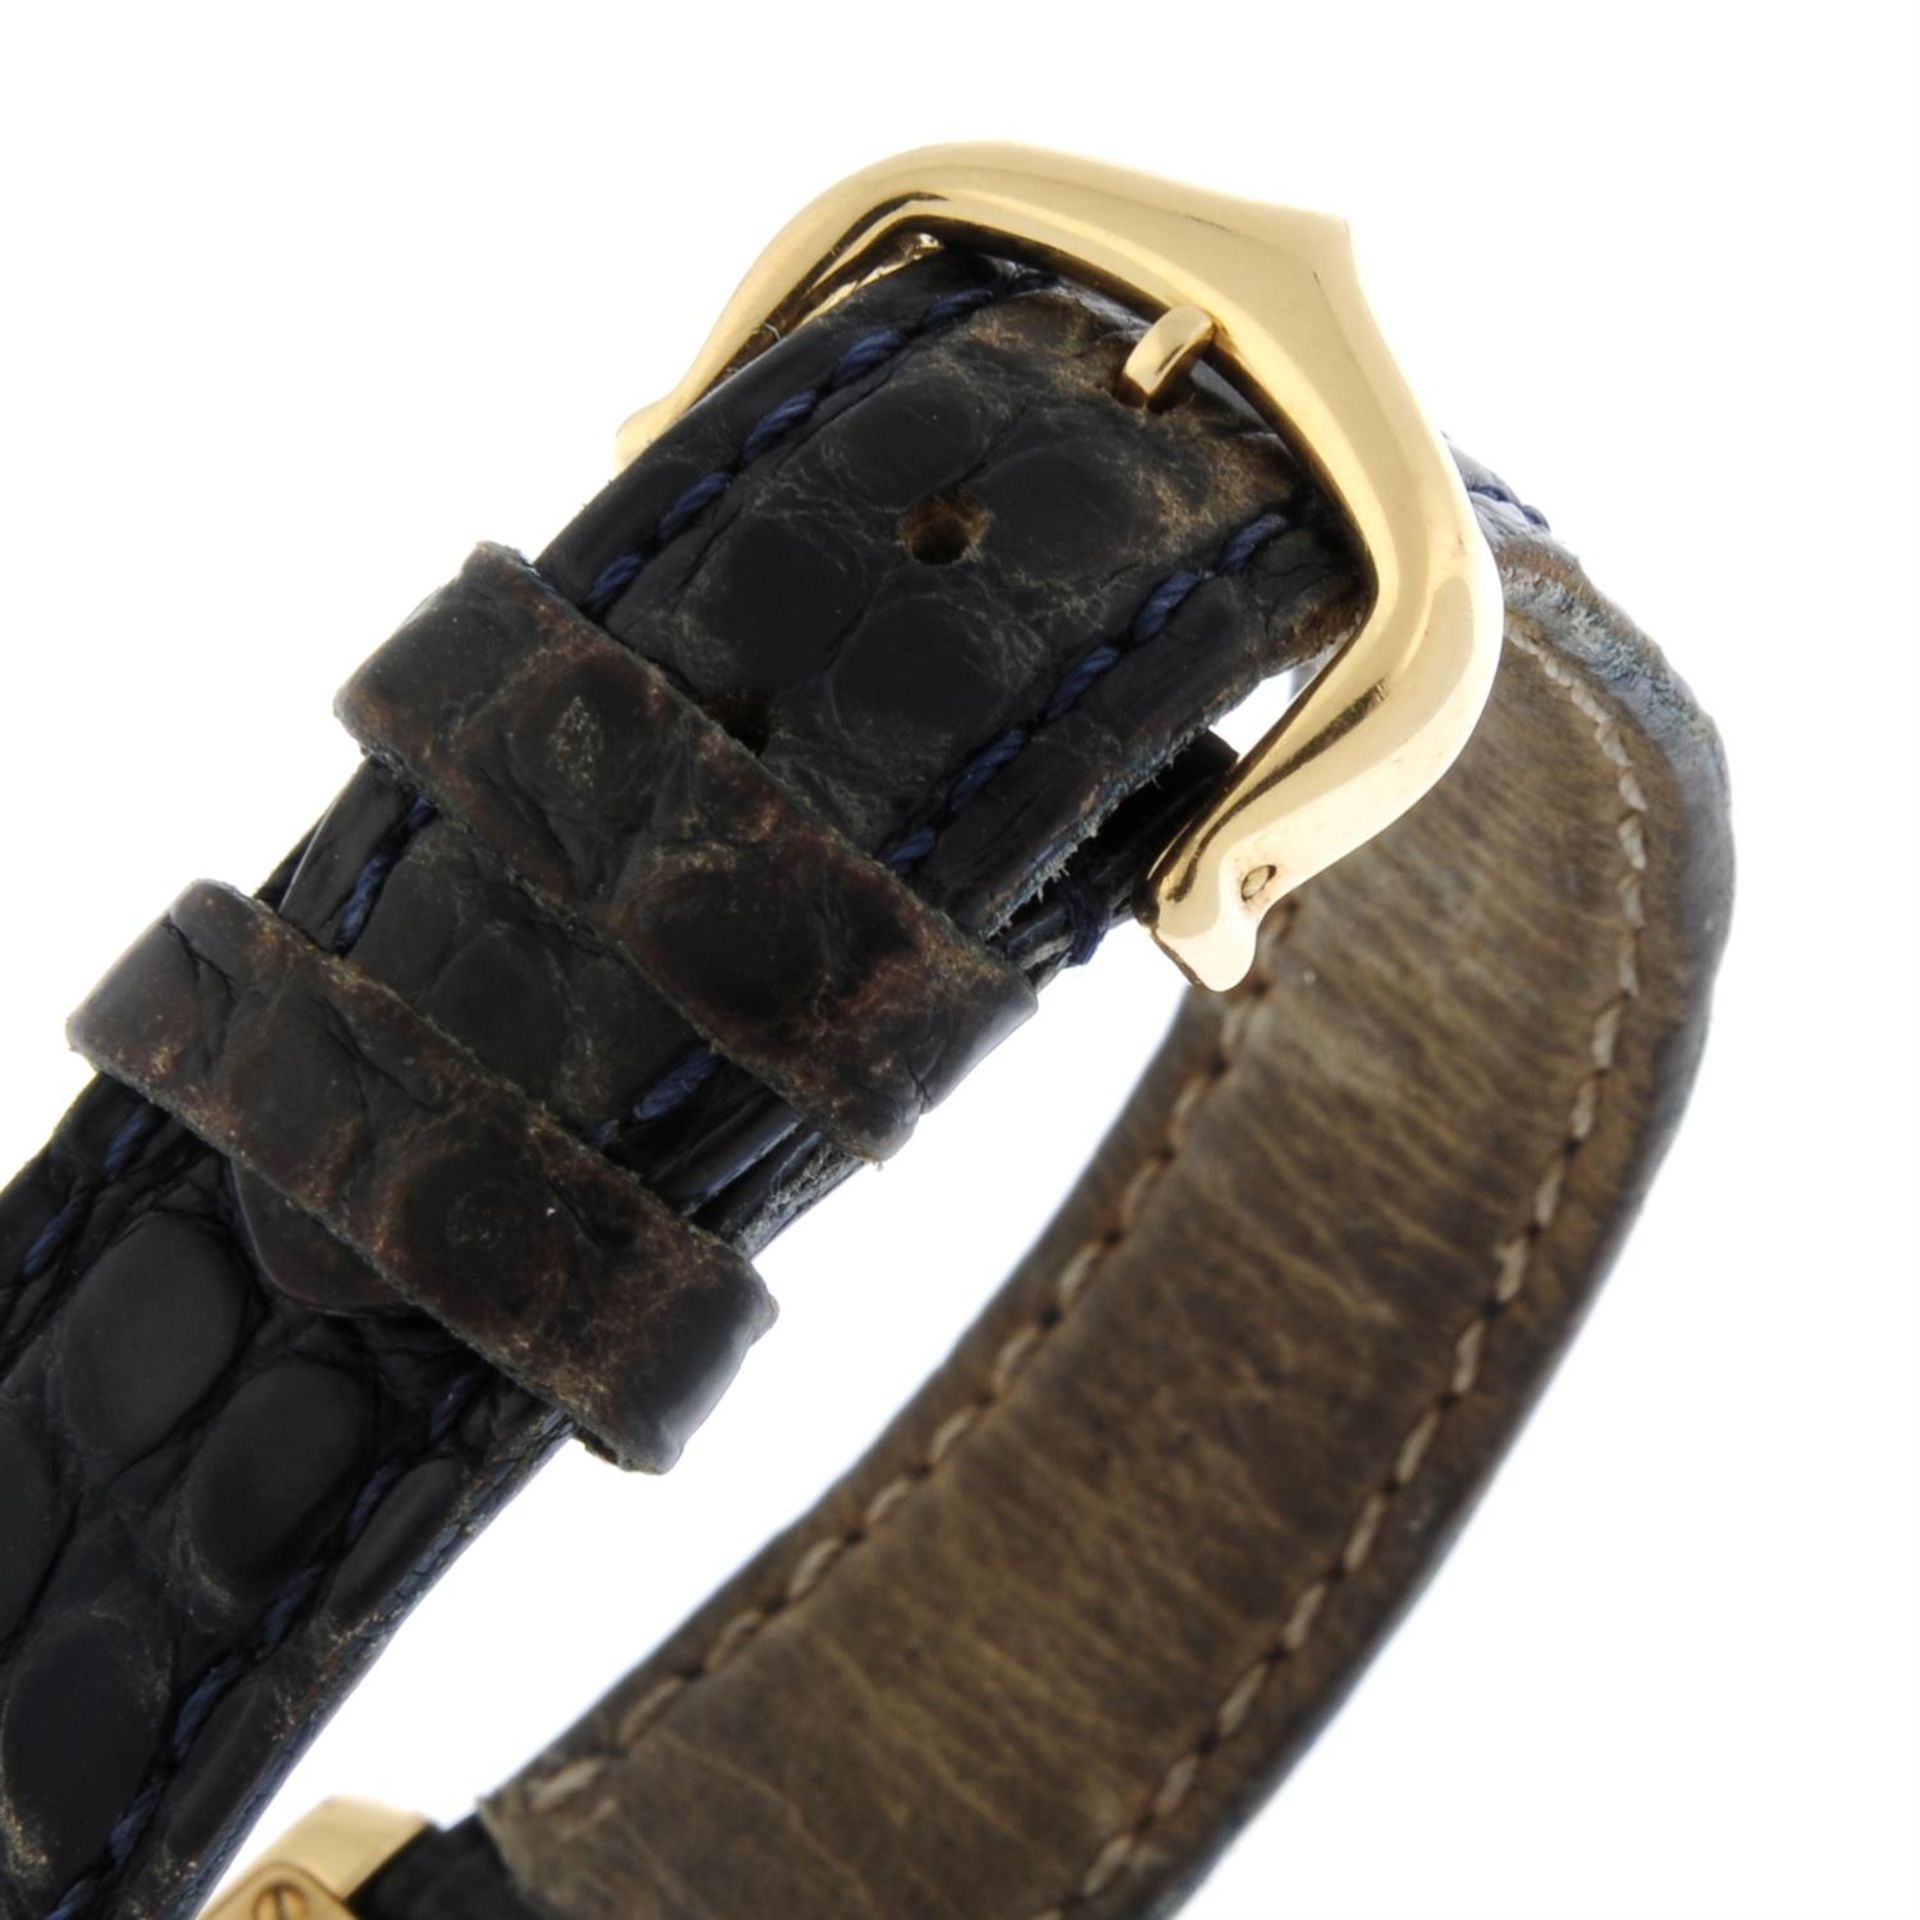 CARTIER - a yellow metal Tank Française wrist watch, 20mm. - Image 2 of 5